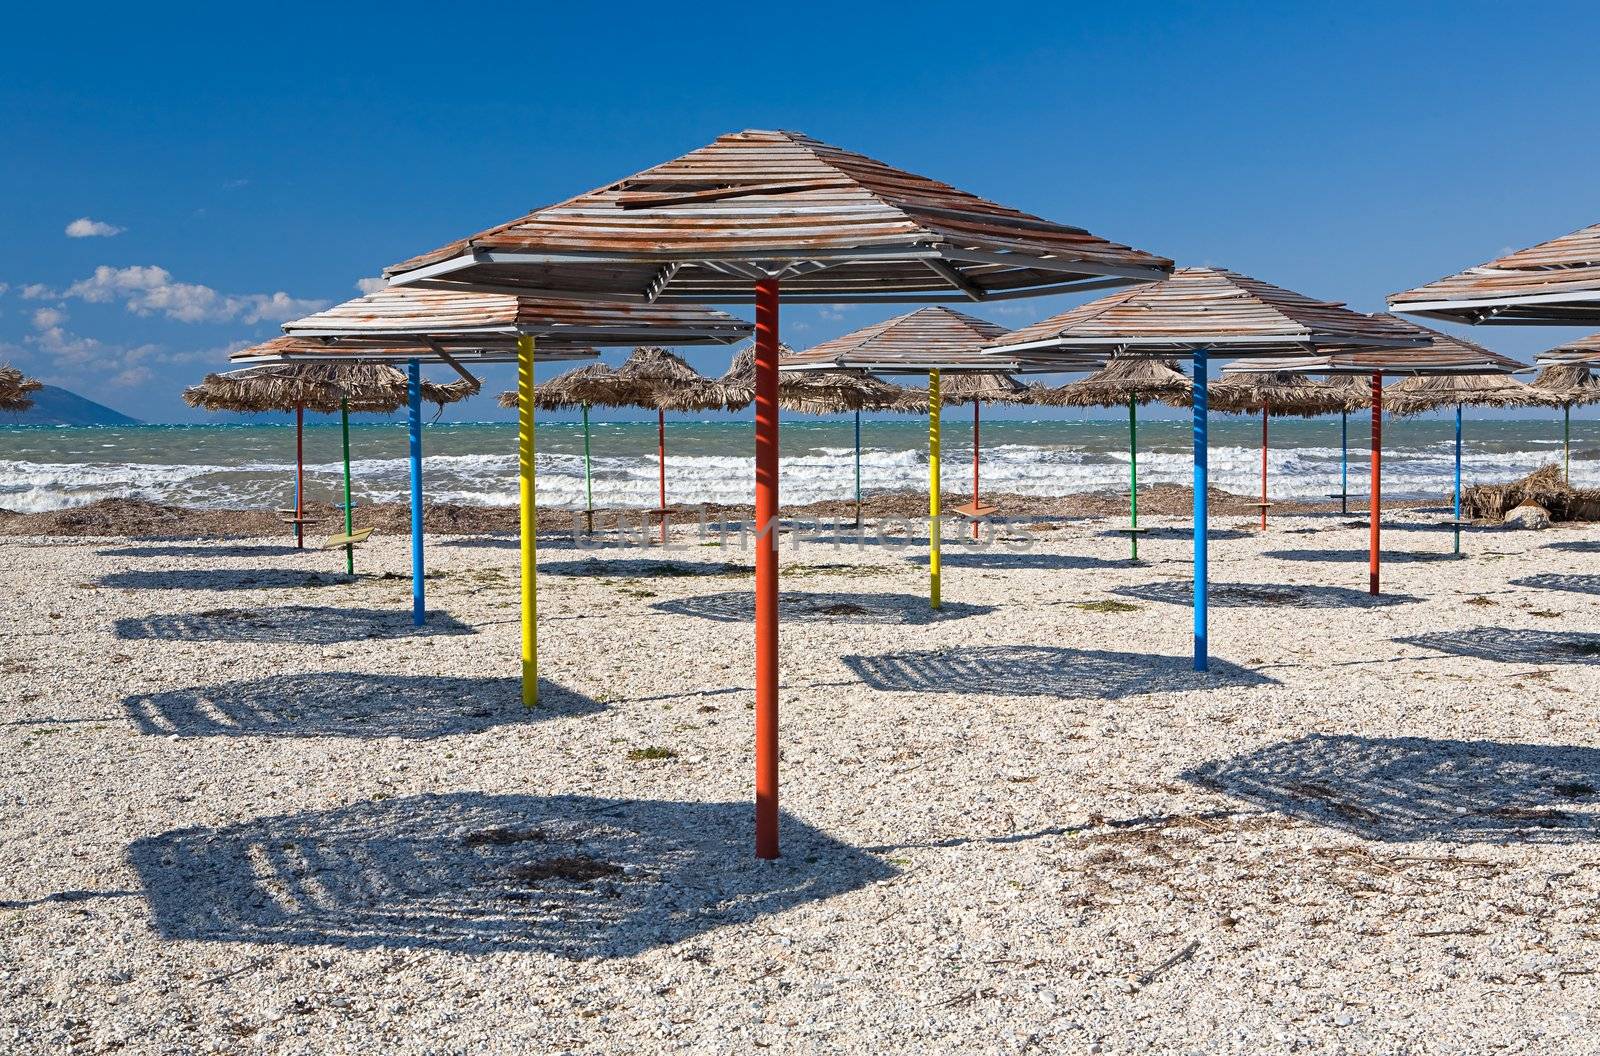 Umbrellas on a beach by Gravicapa